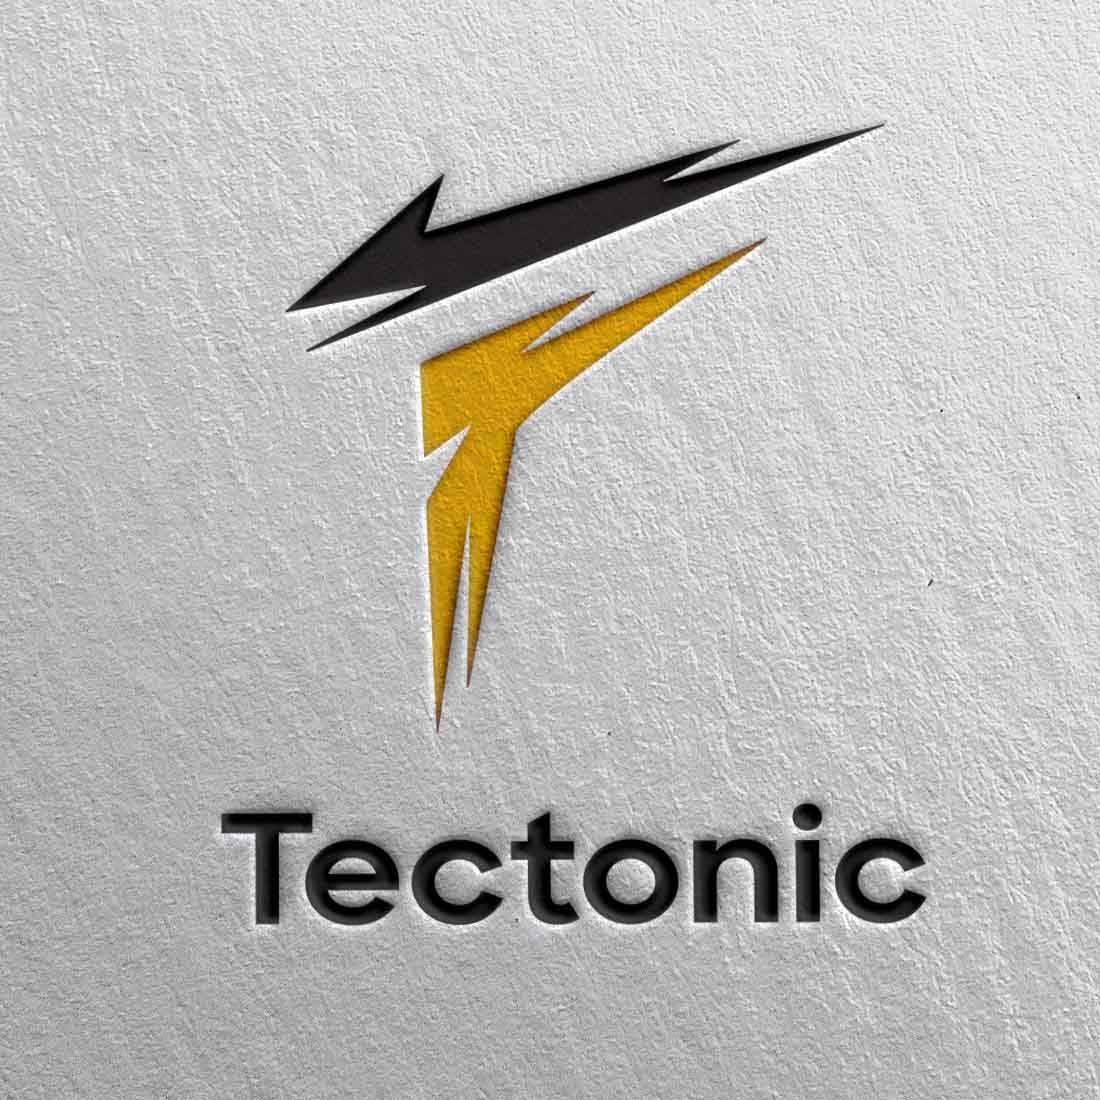 Modern Tectonic Logo Design Template cover image.